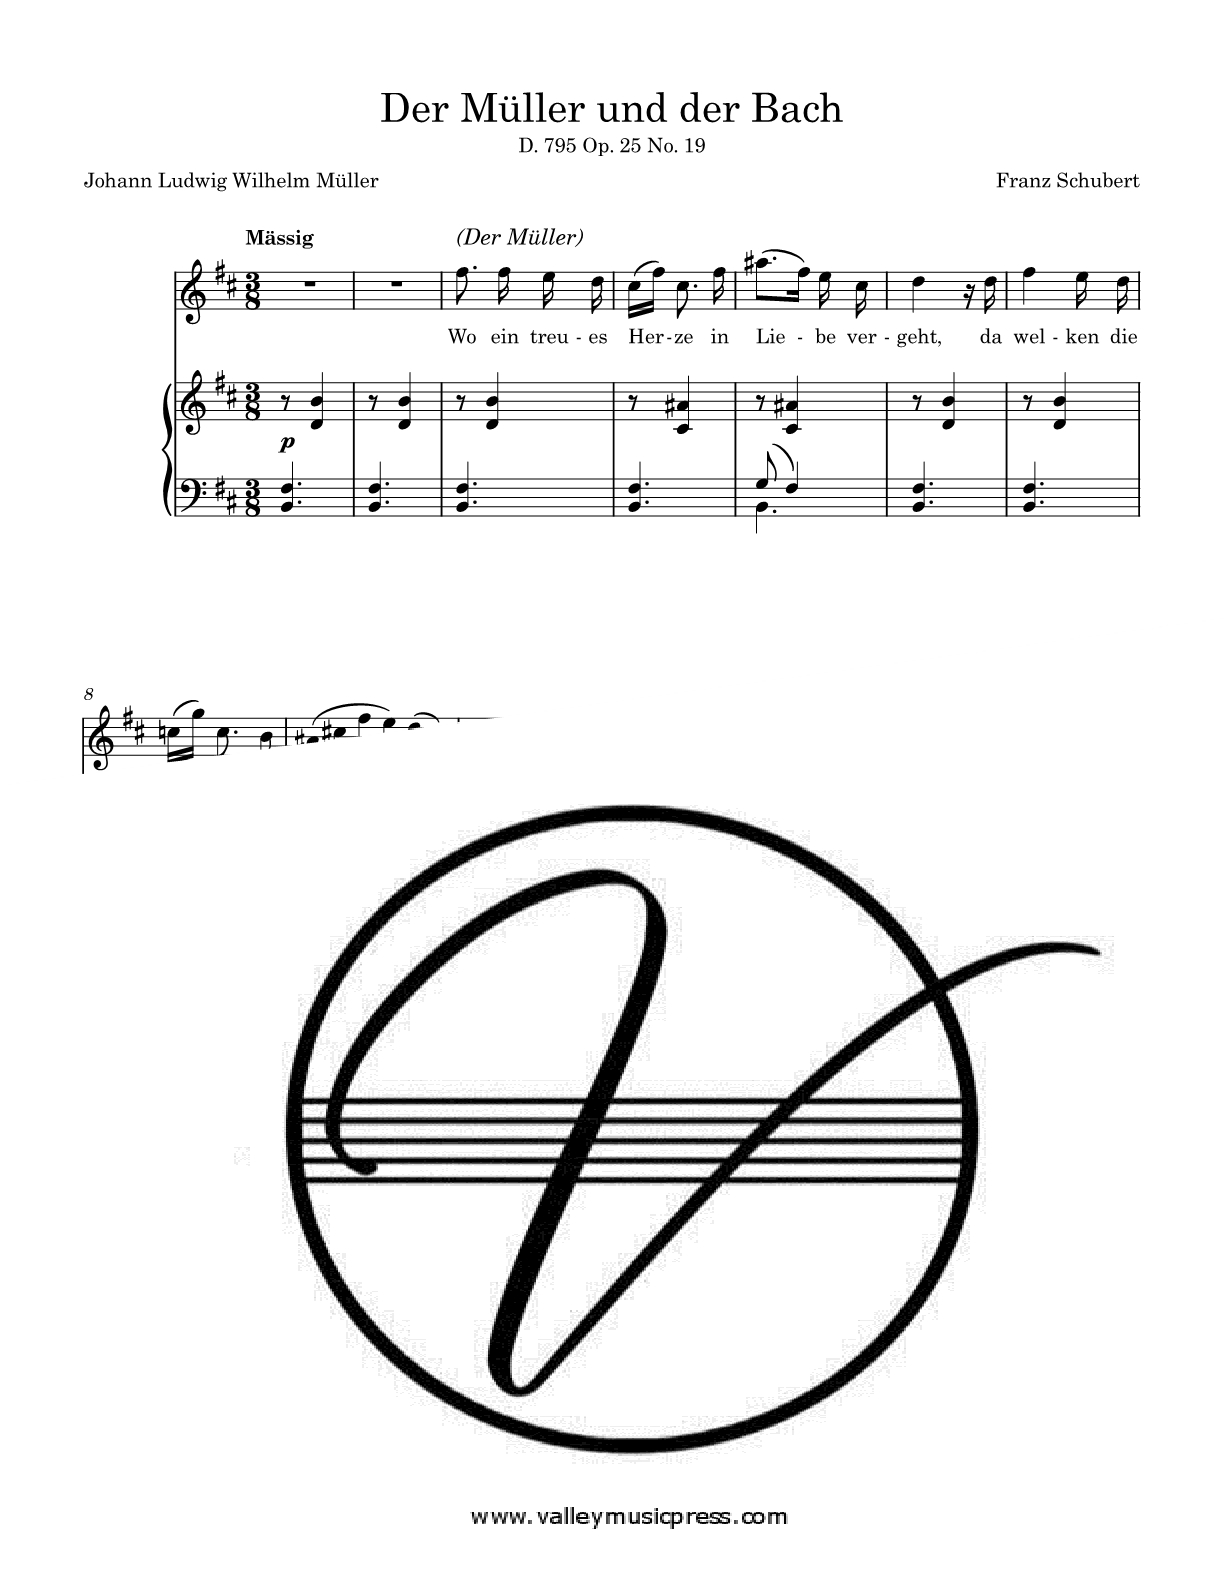 Schubert - Der Muller und der Bach D. 795 Op. 25 No. 19 (Voice) - Click Image to Close